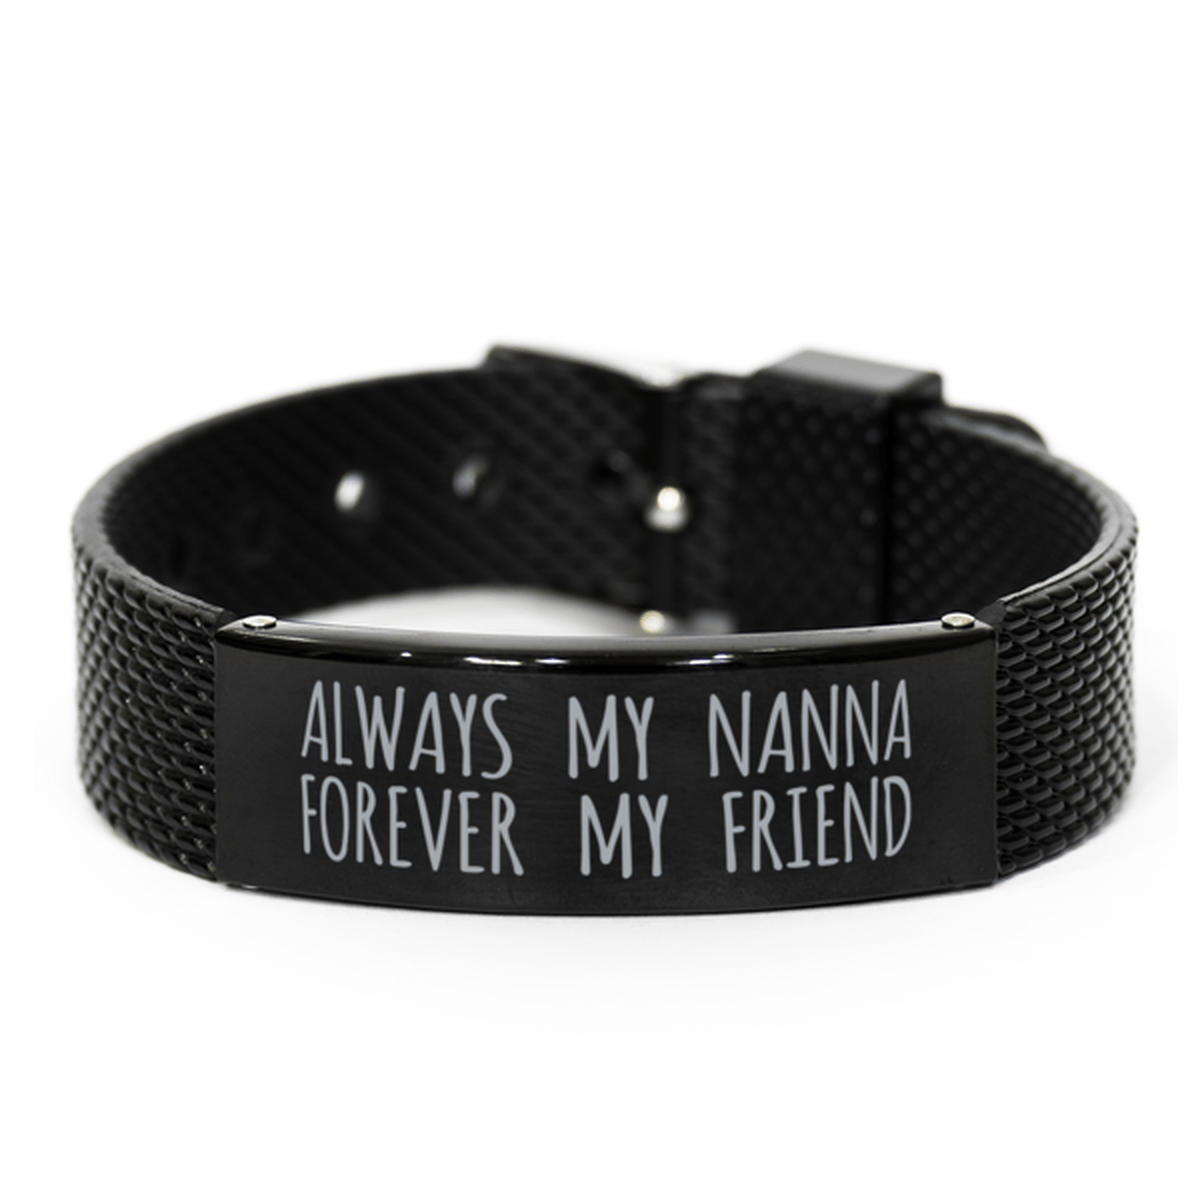 Inspirational Nanna Black Shark Mesh Bracelet, Always My Nanna Forever My Friend, Best Birthday Gifts for Family Friends